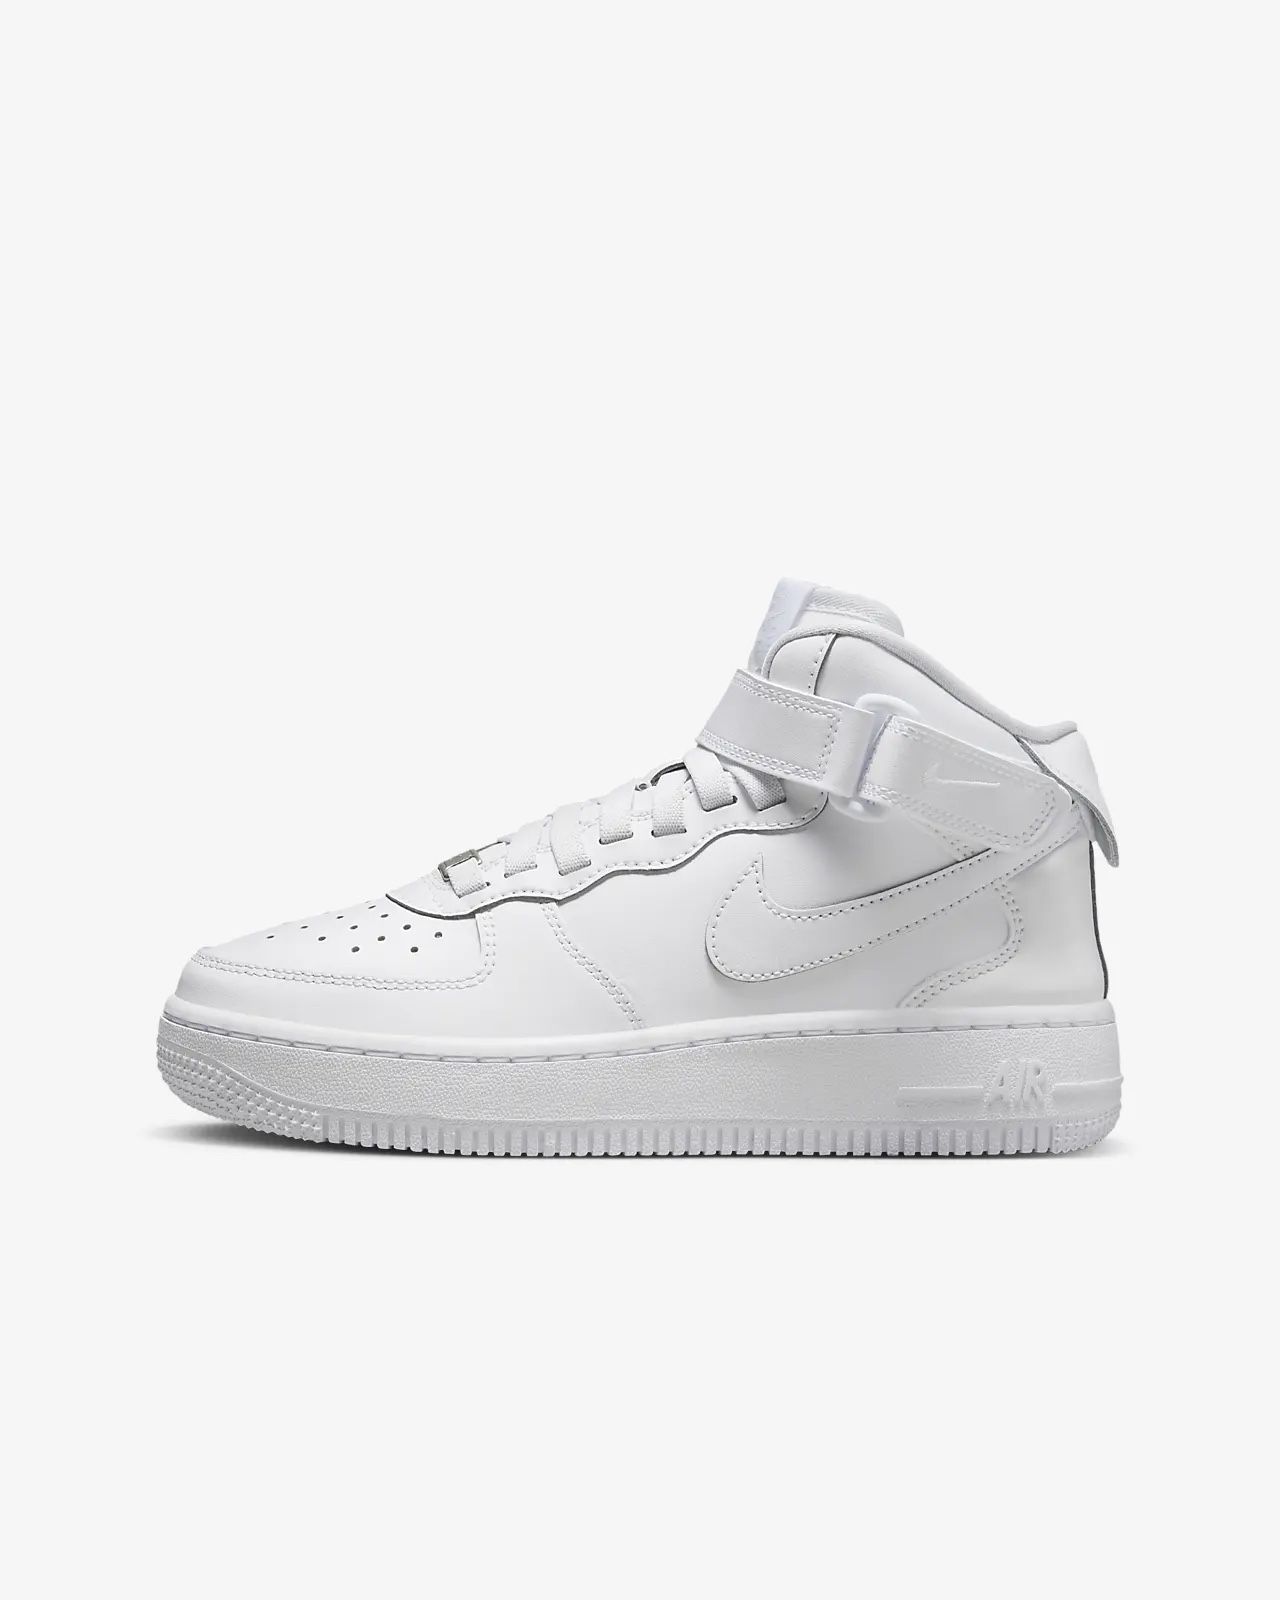 Nike Air Force 1 Mid EasyOn 6Y Big Kids' Shoes $60